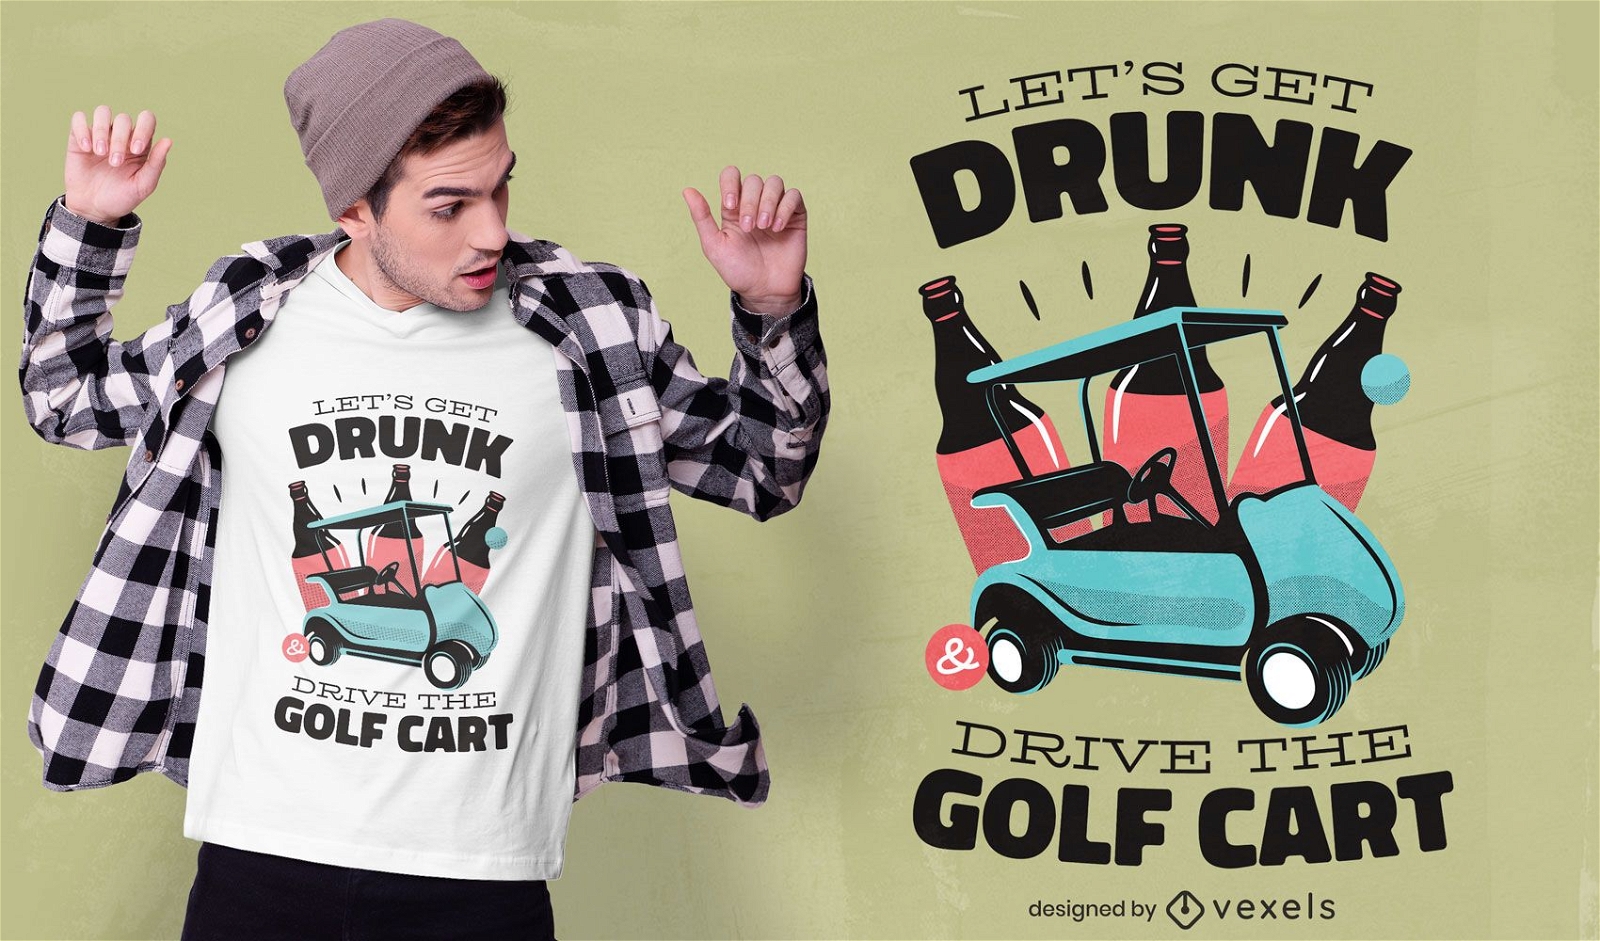 Golf cart drunk driving quote t-shirt design